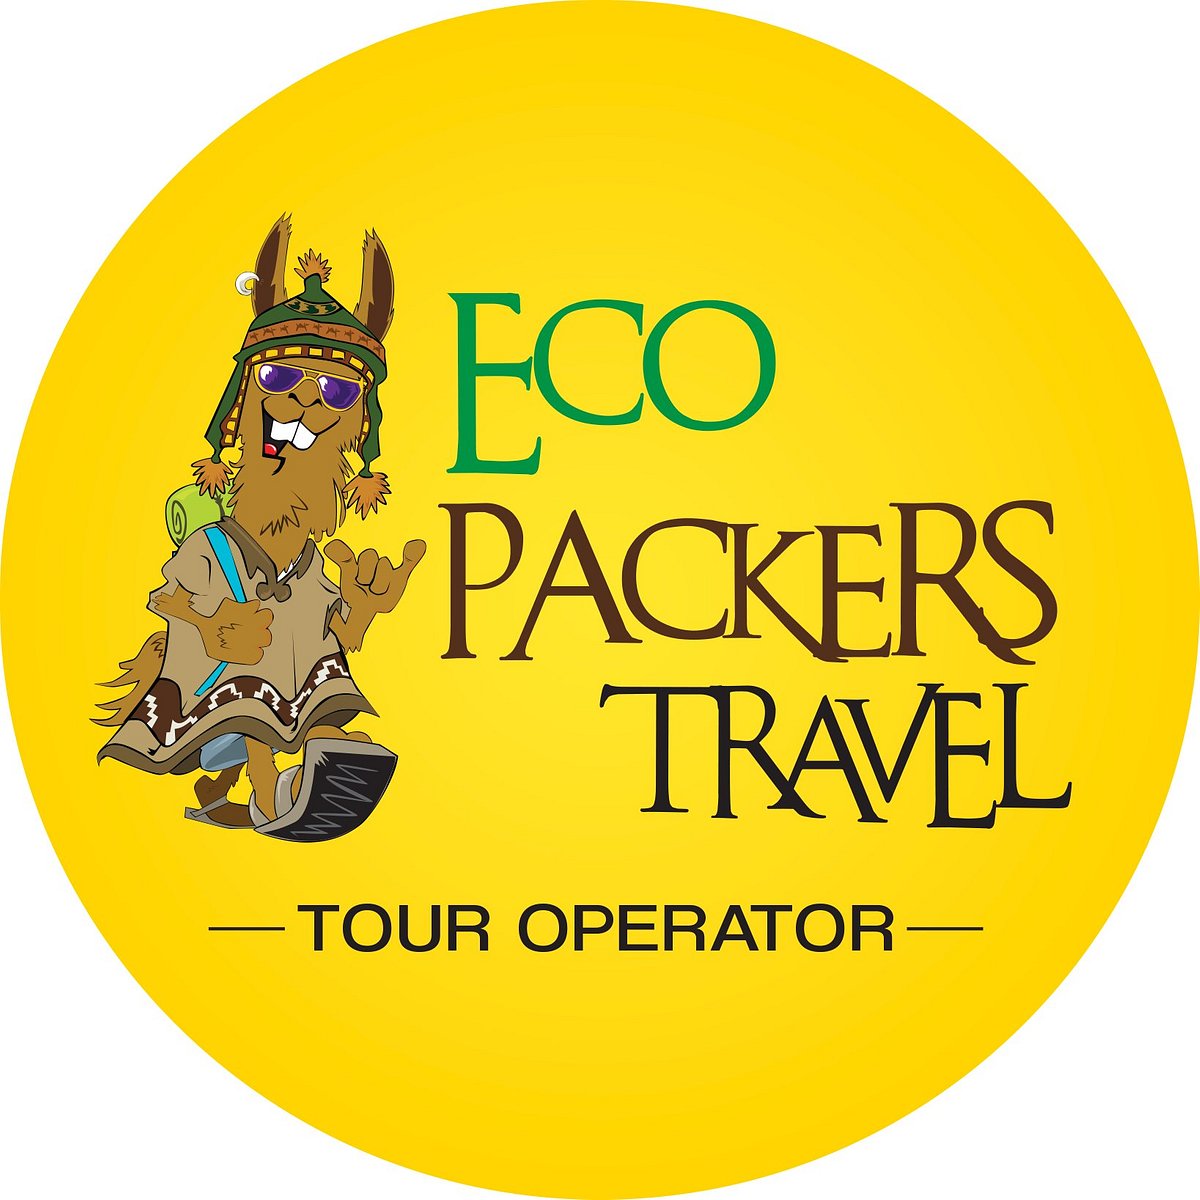 ecopackers travel